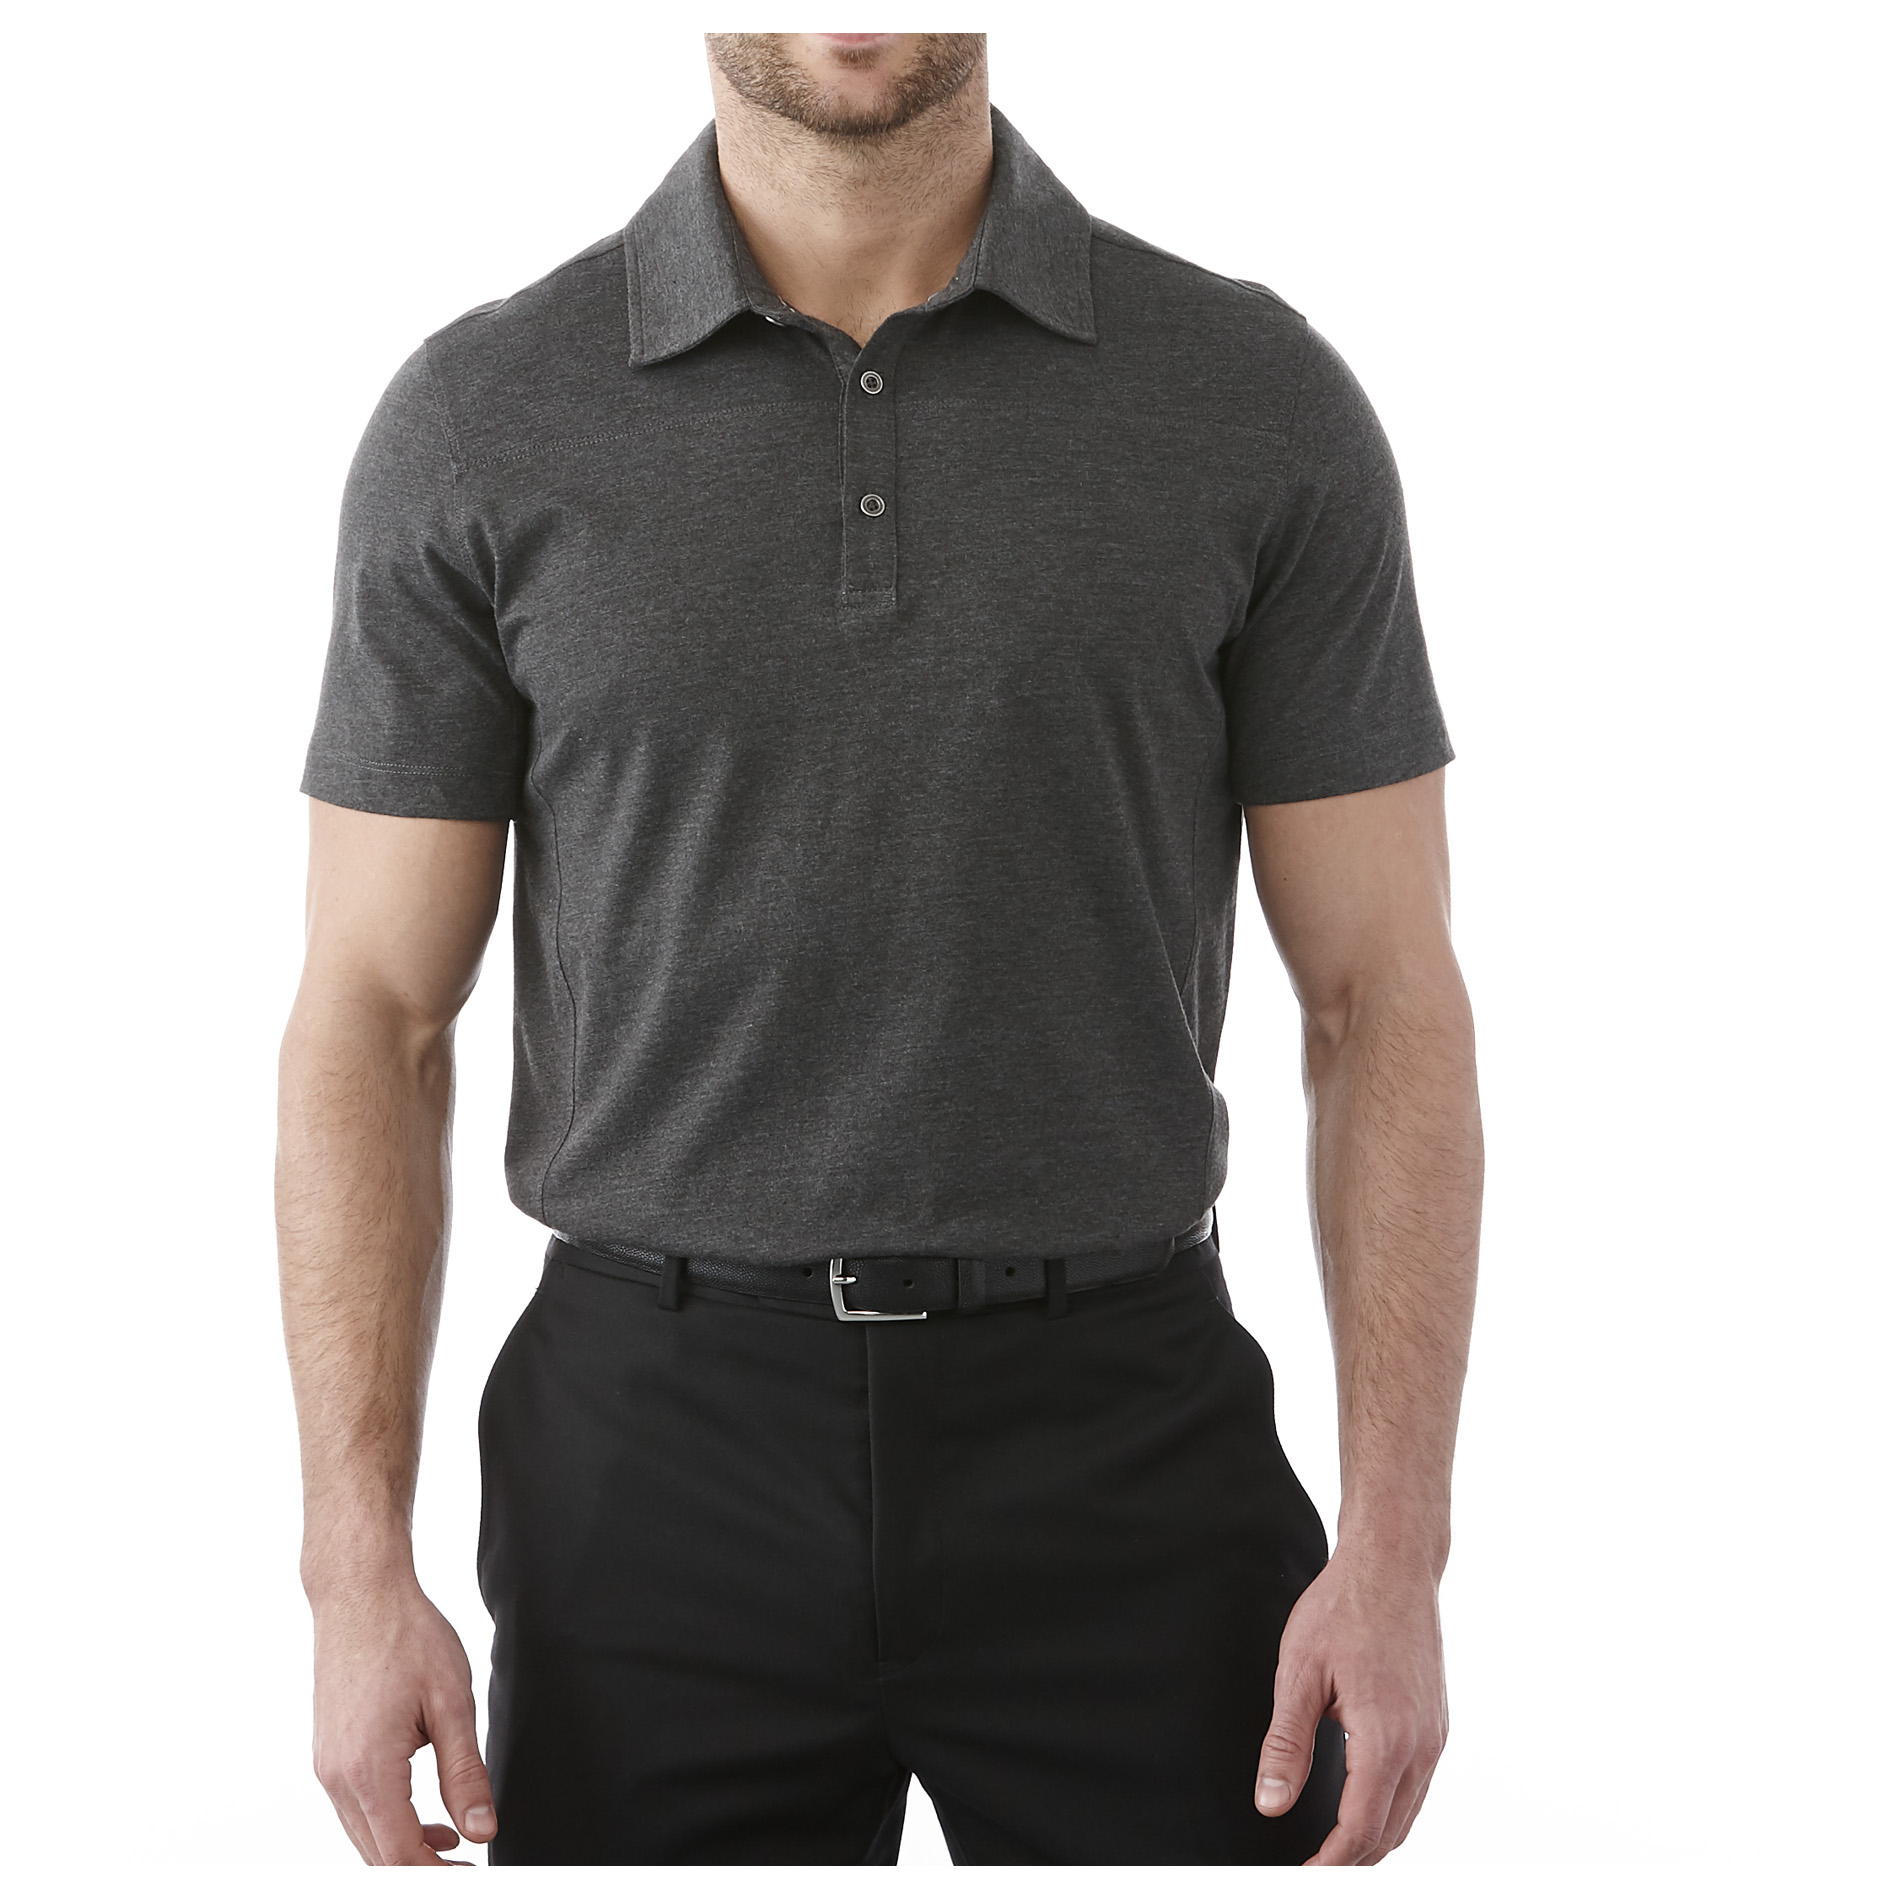 Trimark TM16611 - Men's CONCORD Short Sleeve Polo